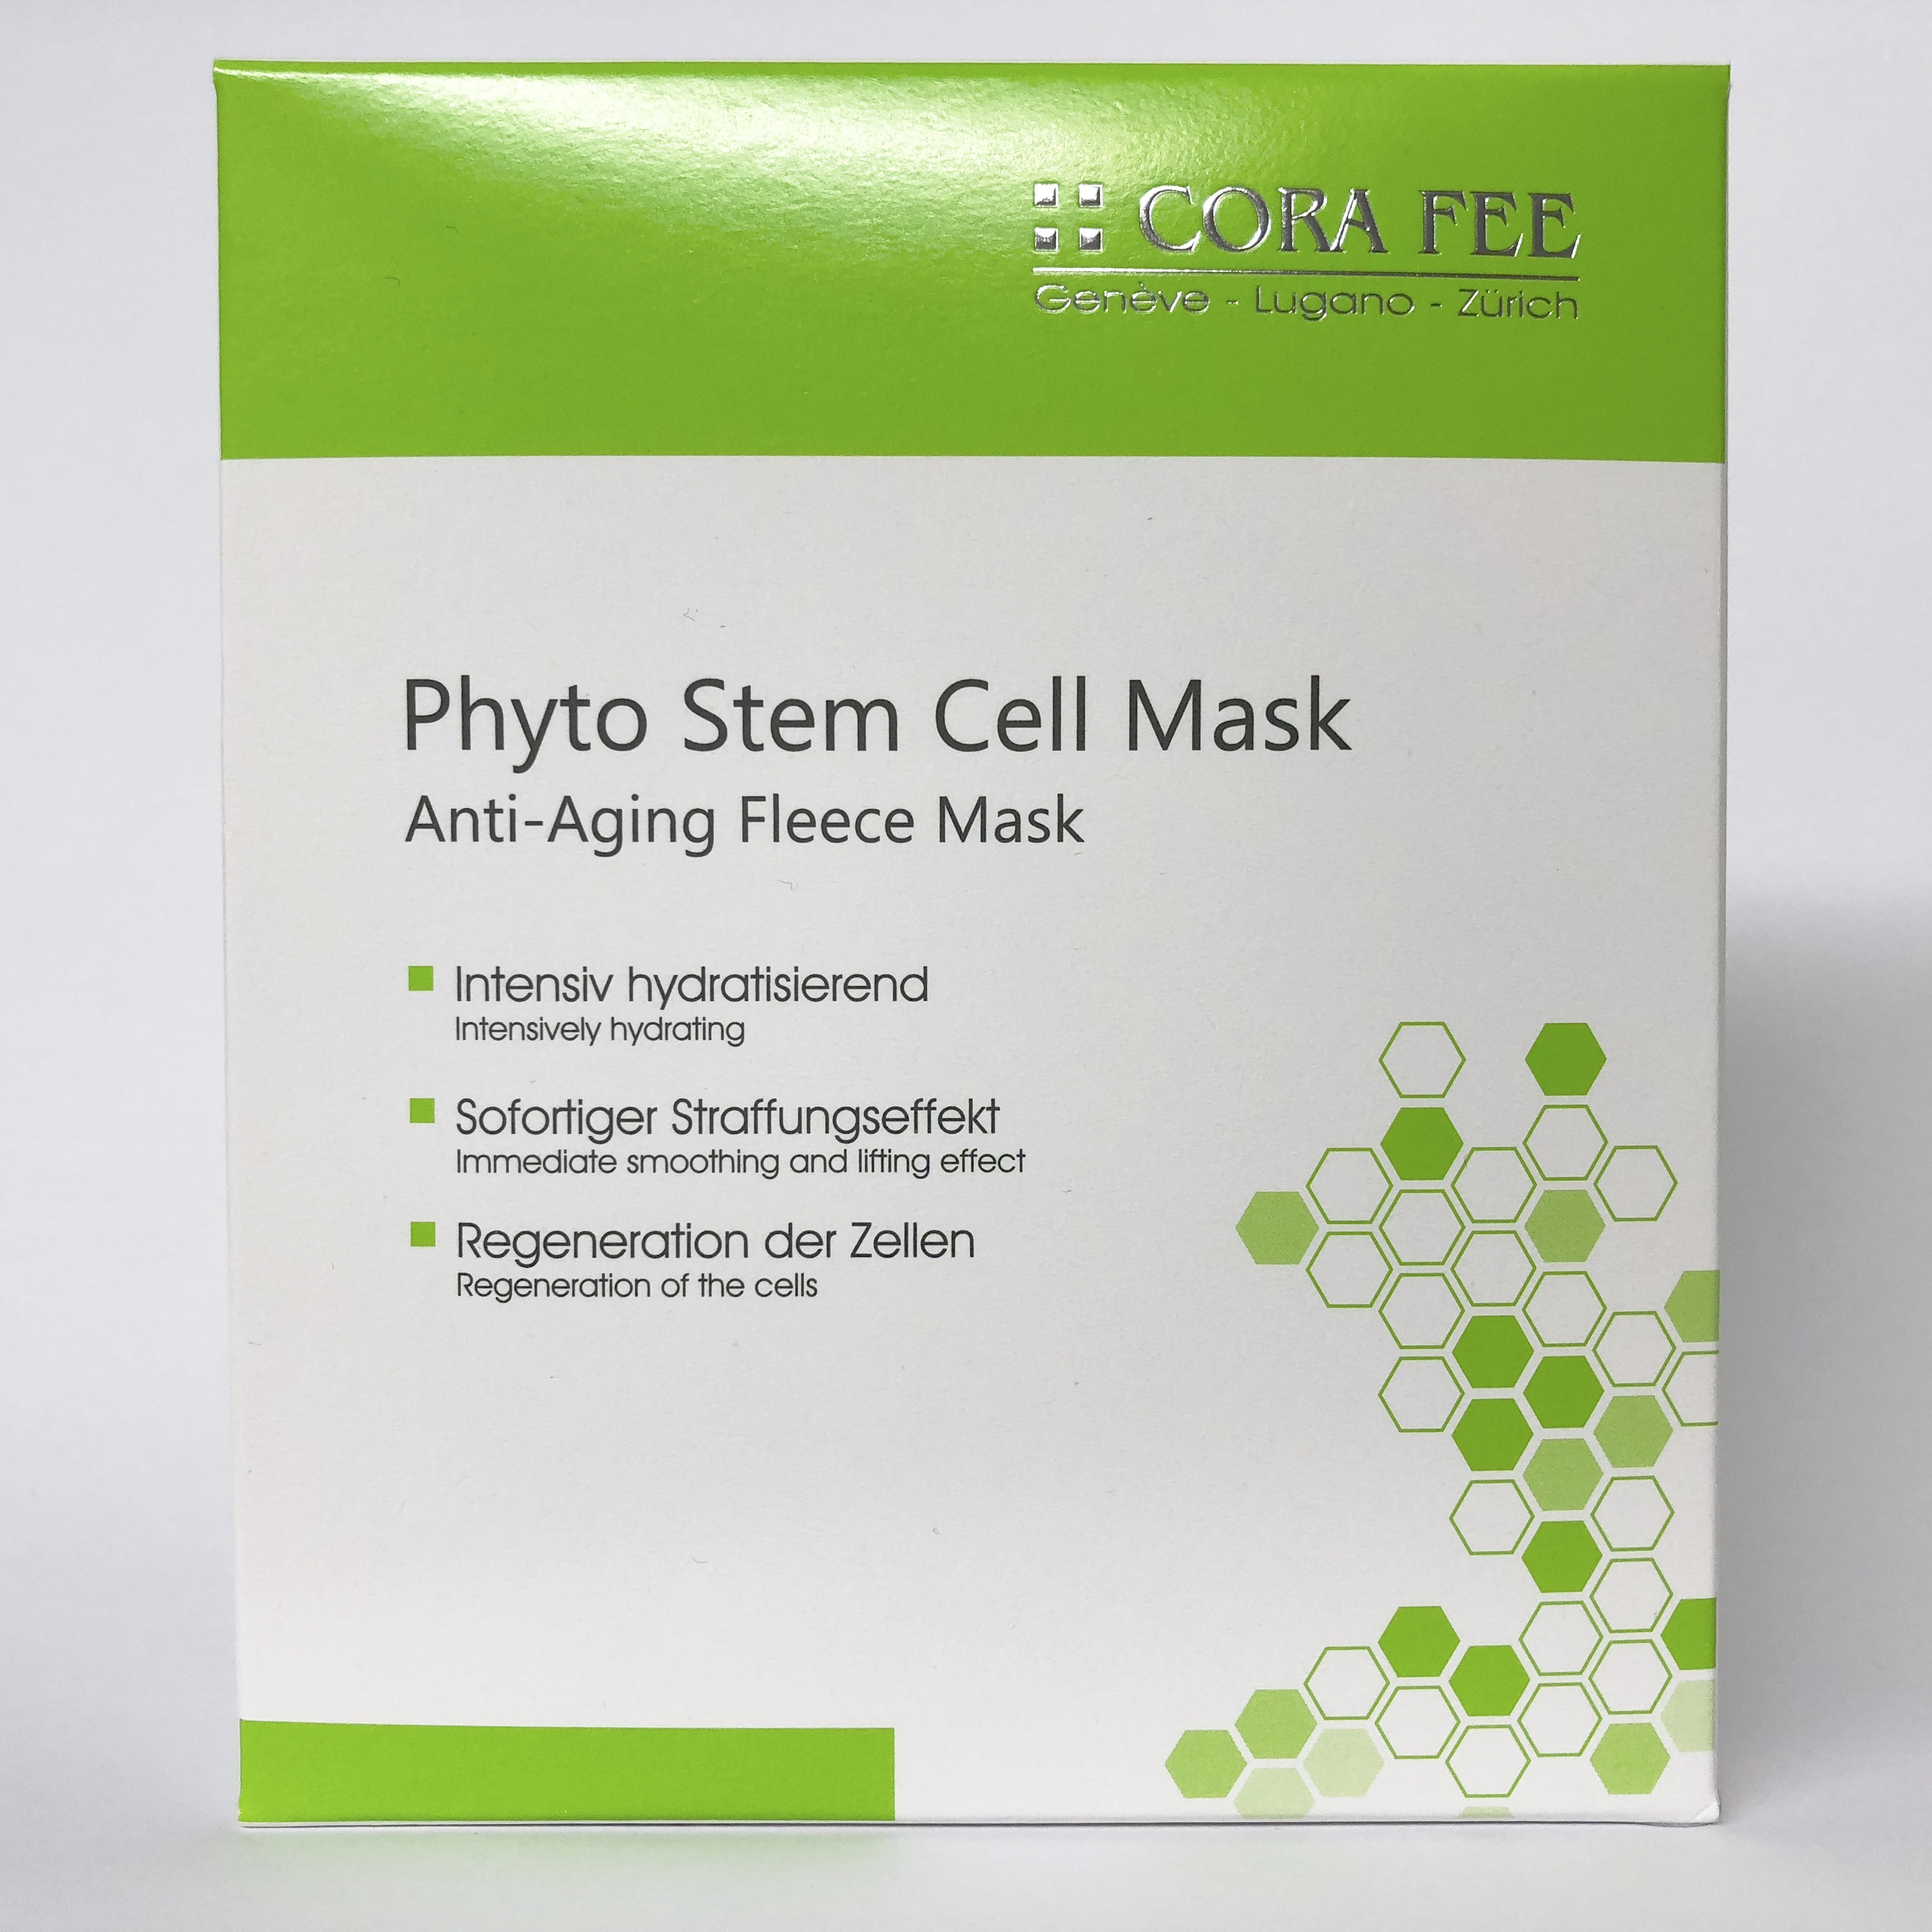 Cora Fee Phyto Stem Cell Mask | Anti-Aging Fleece Mask 5 Stück